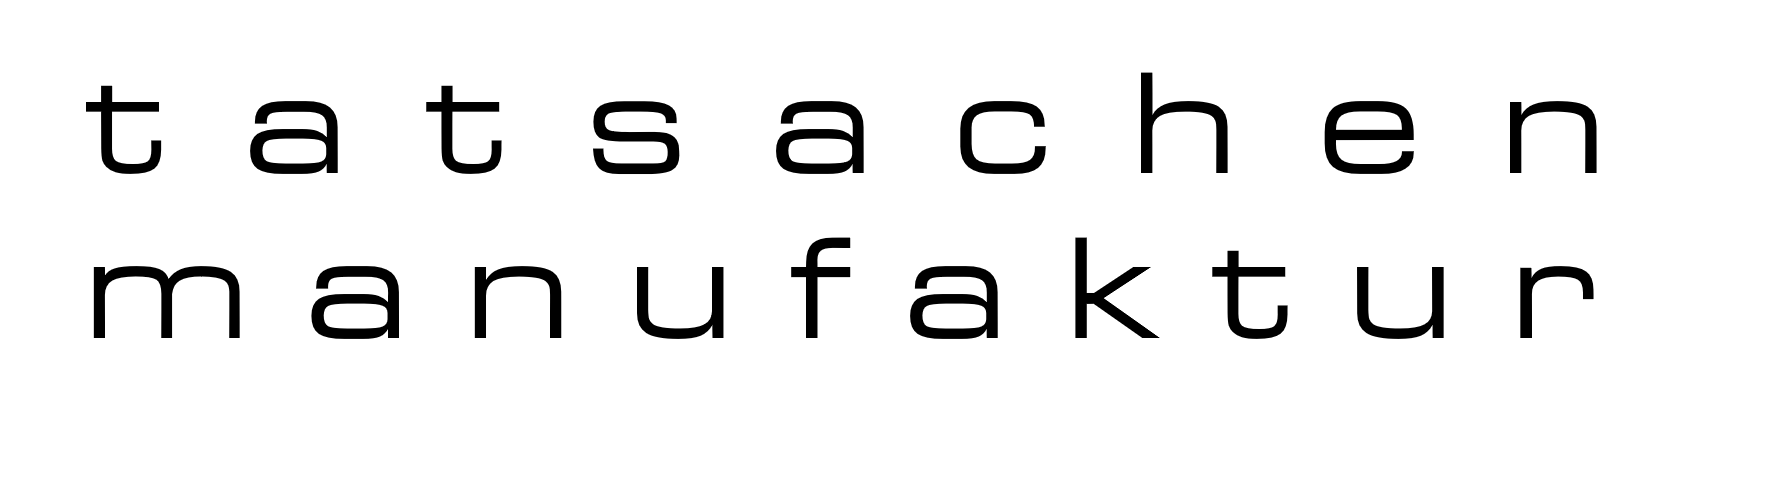 Logo Tatsachenmanufaktur; Tatsachenmanufaktur; Ronft; Eventpsychologie; Eventpsychology; Event psychology